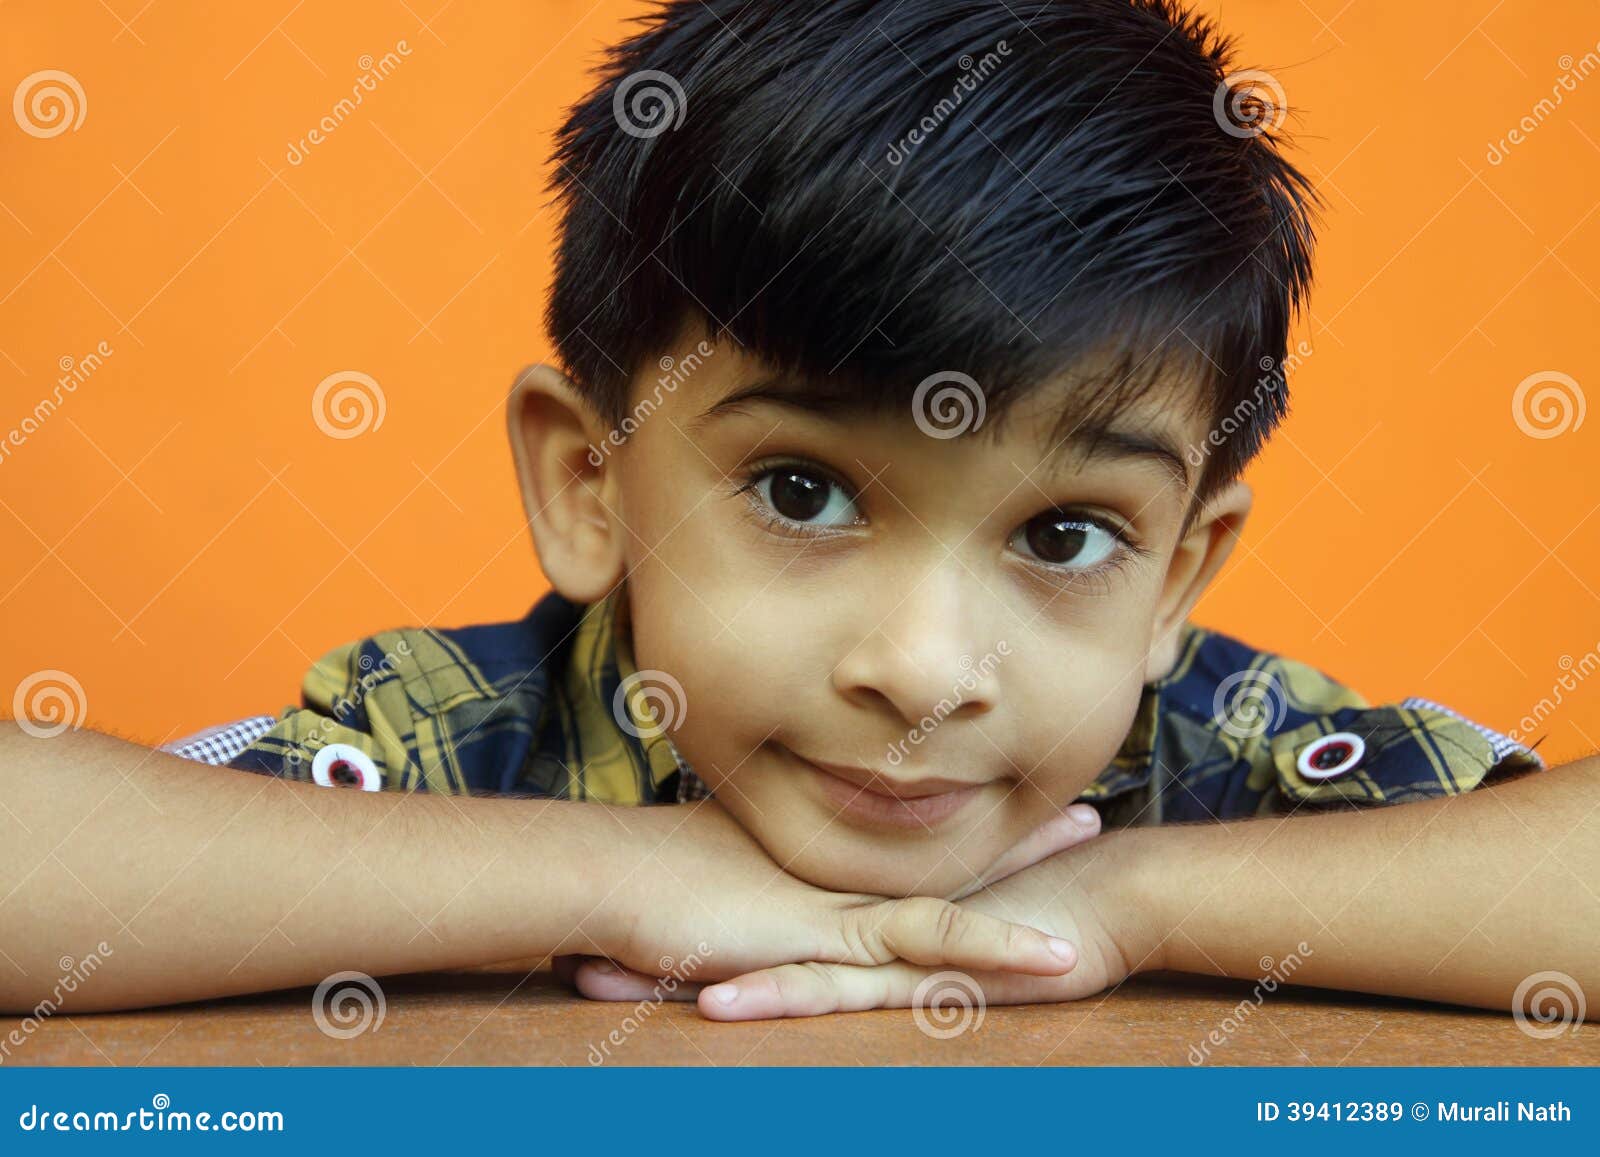 Indian Little Boy stock image. Image of smart, beautiful - 39412389